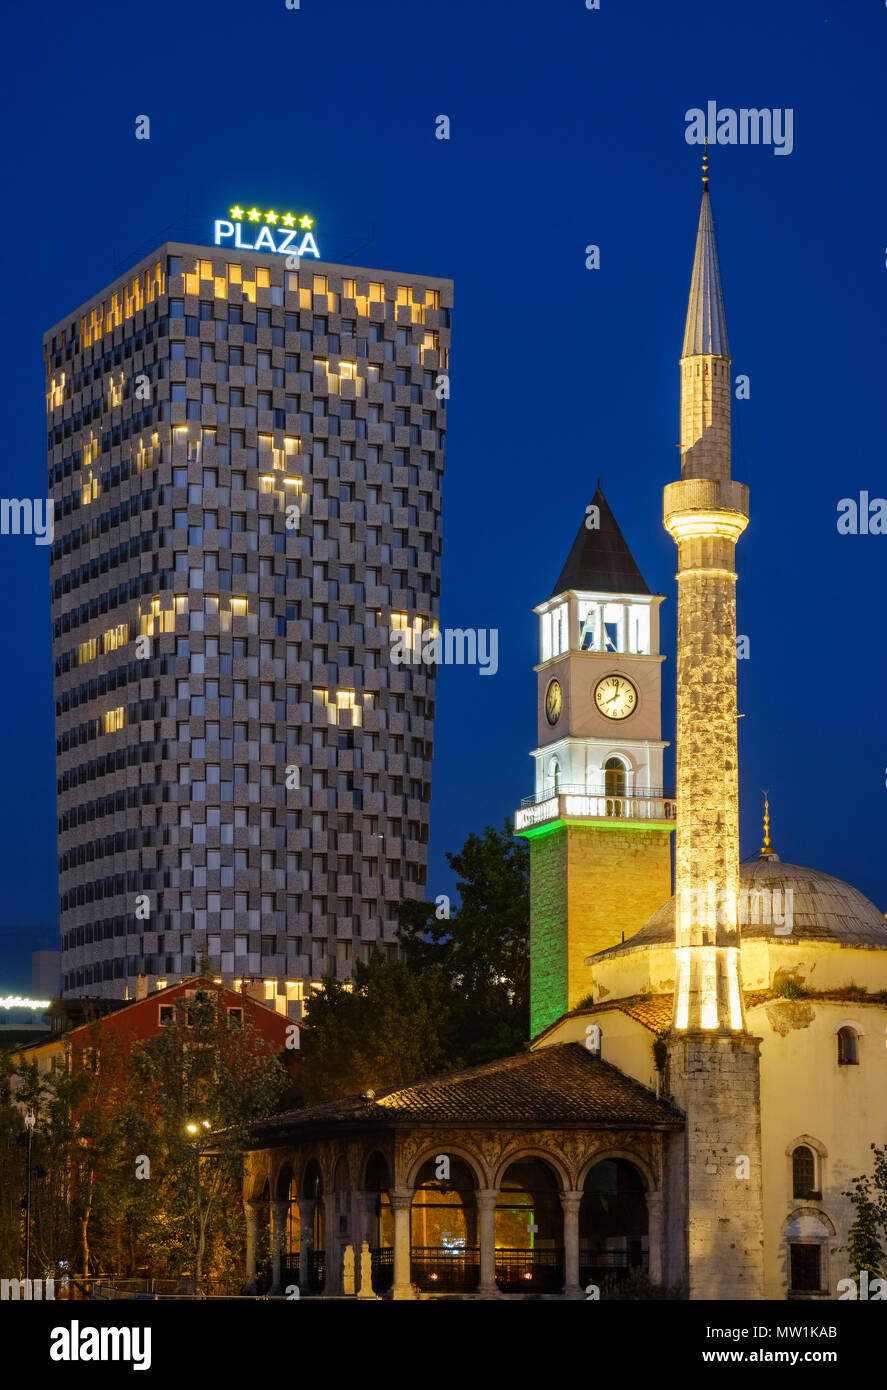 Ethem-Bey Mosque, Clock Tower and TID Tower Hotel Plaza, night view, Tirana, Albania Stock Photo